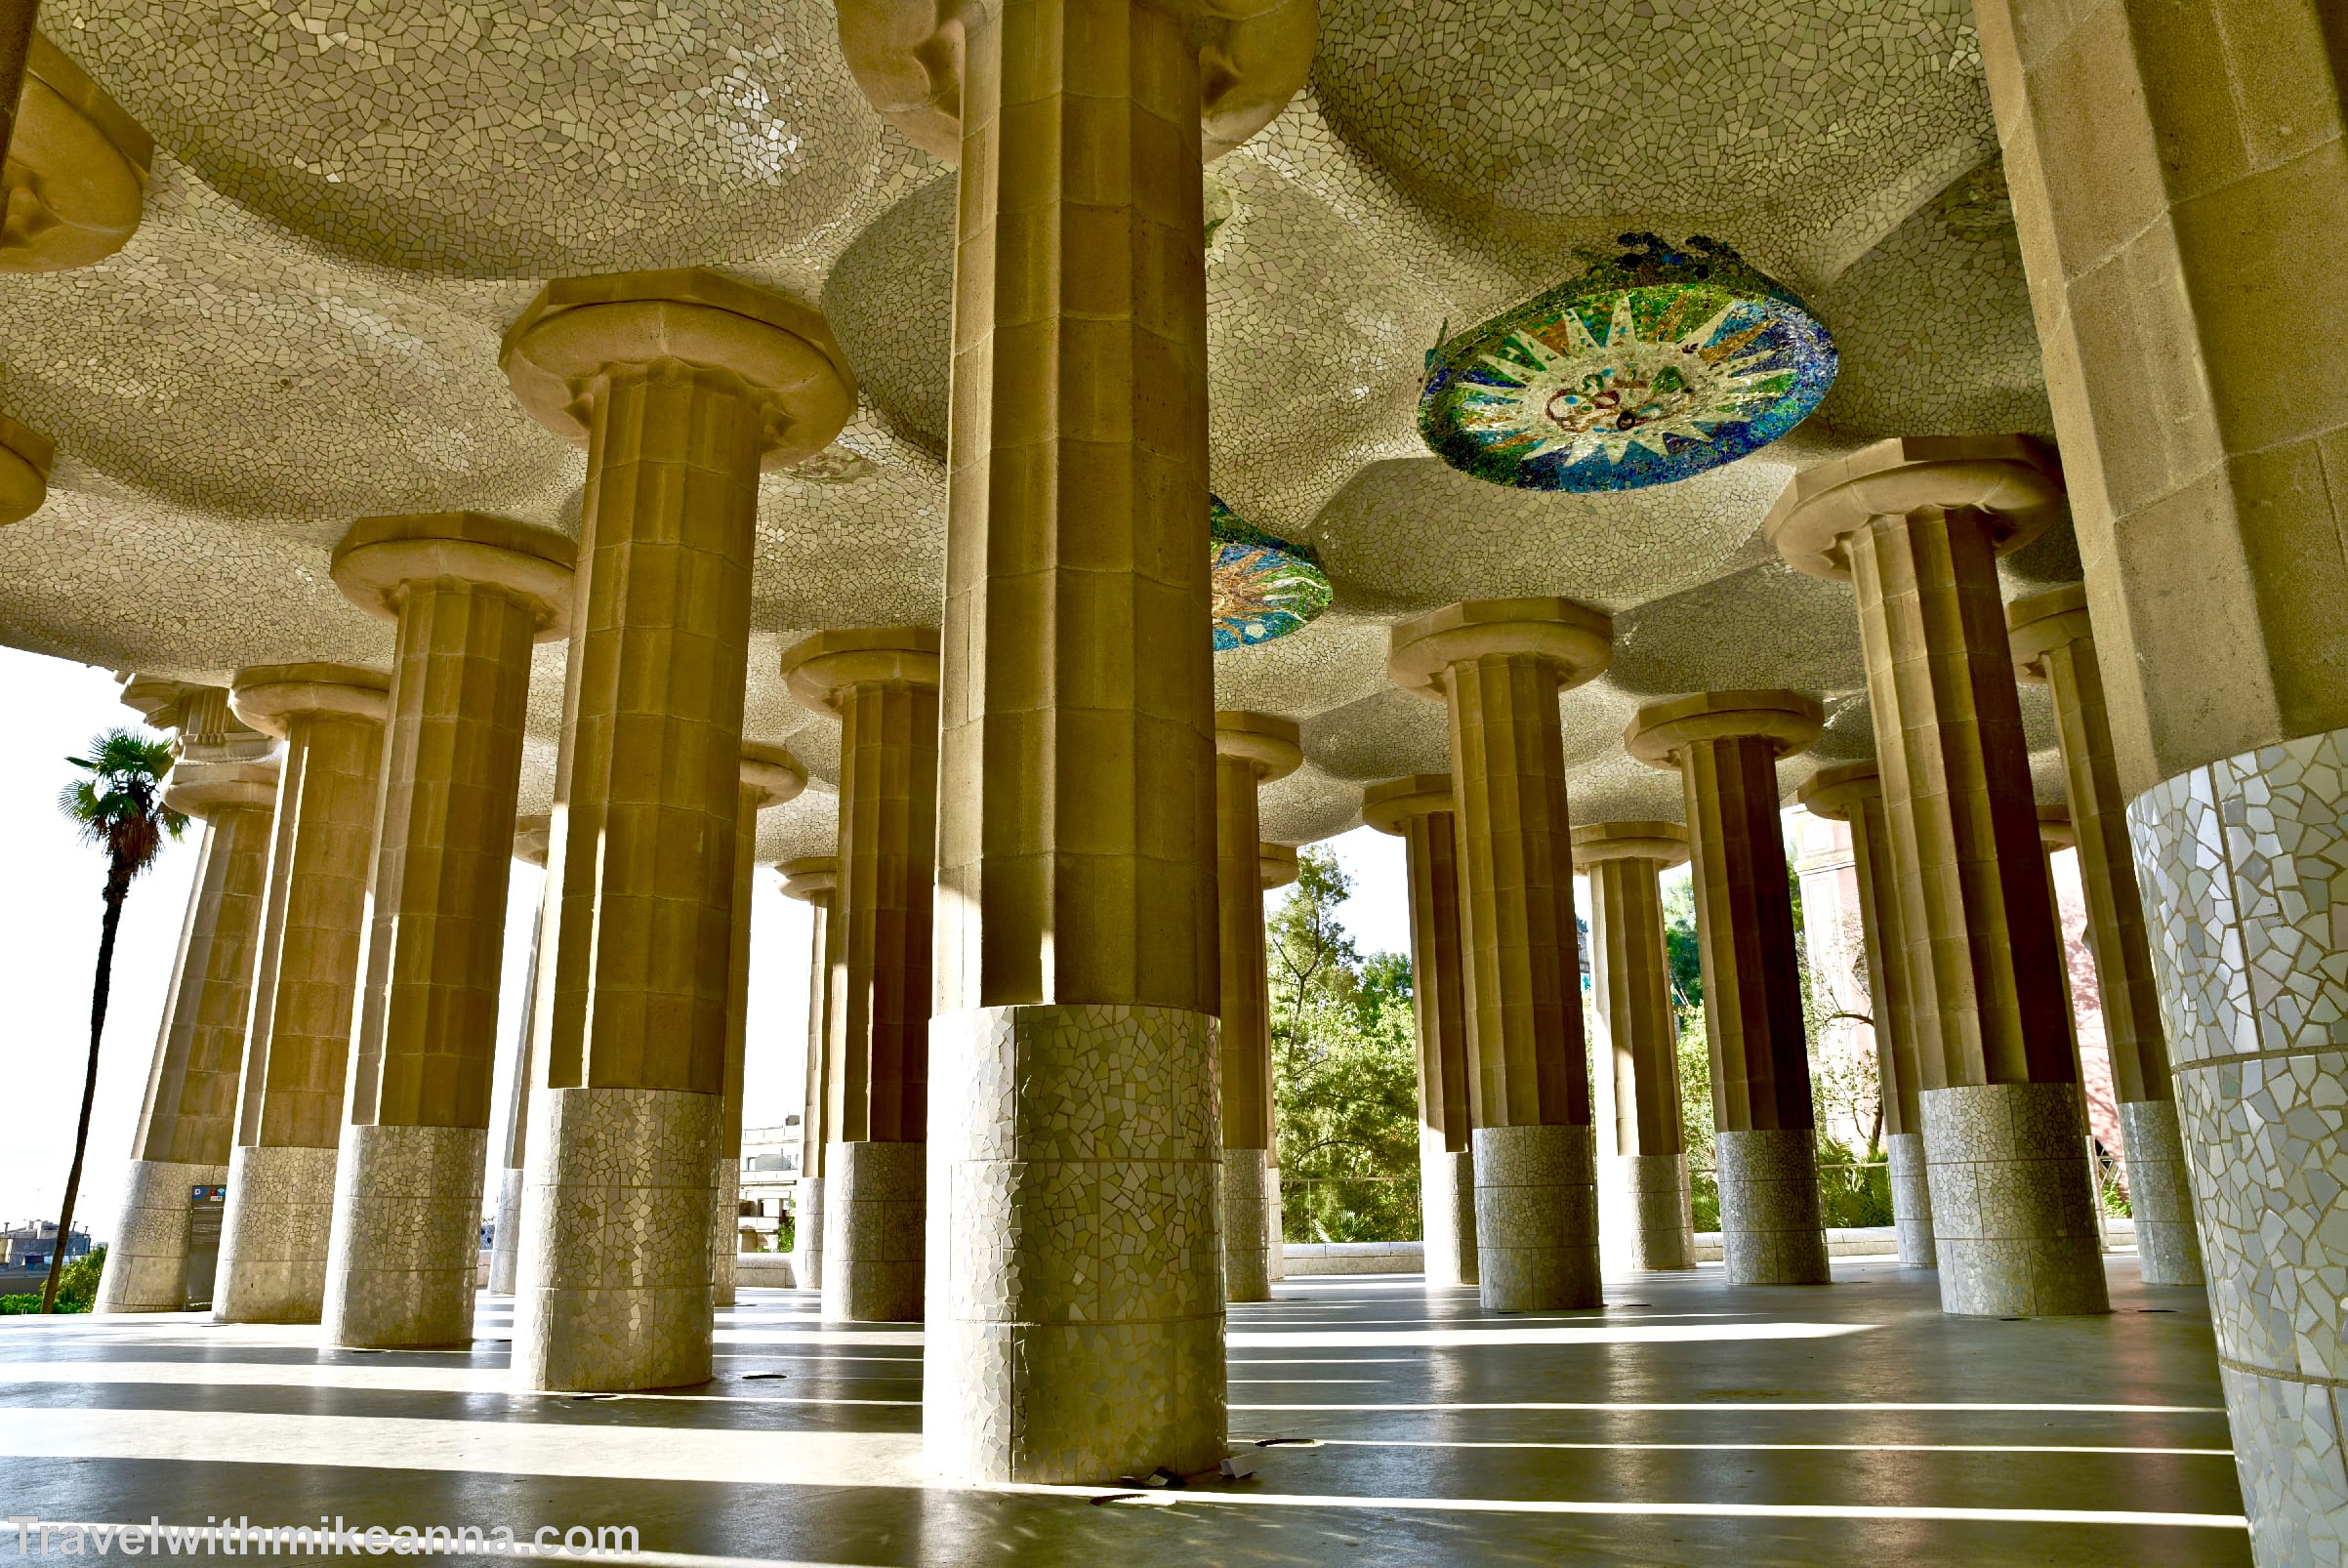 奎爾公園 Park Guell, Hall of 100 columns百柱大廳 